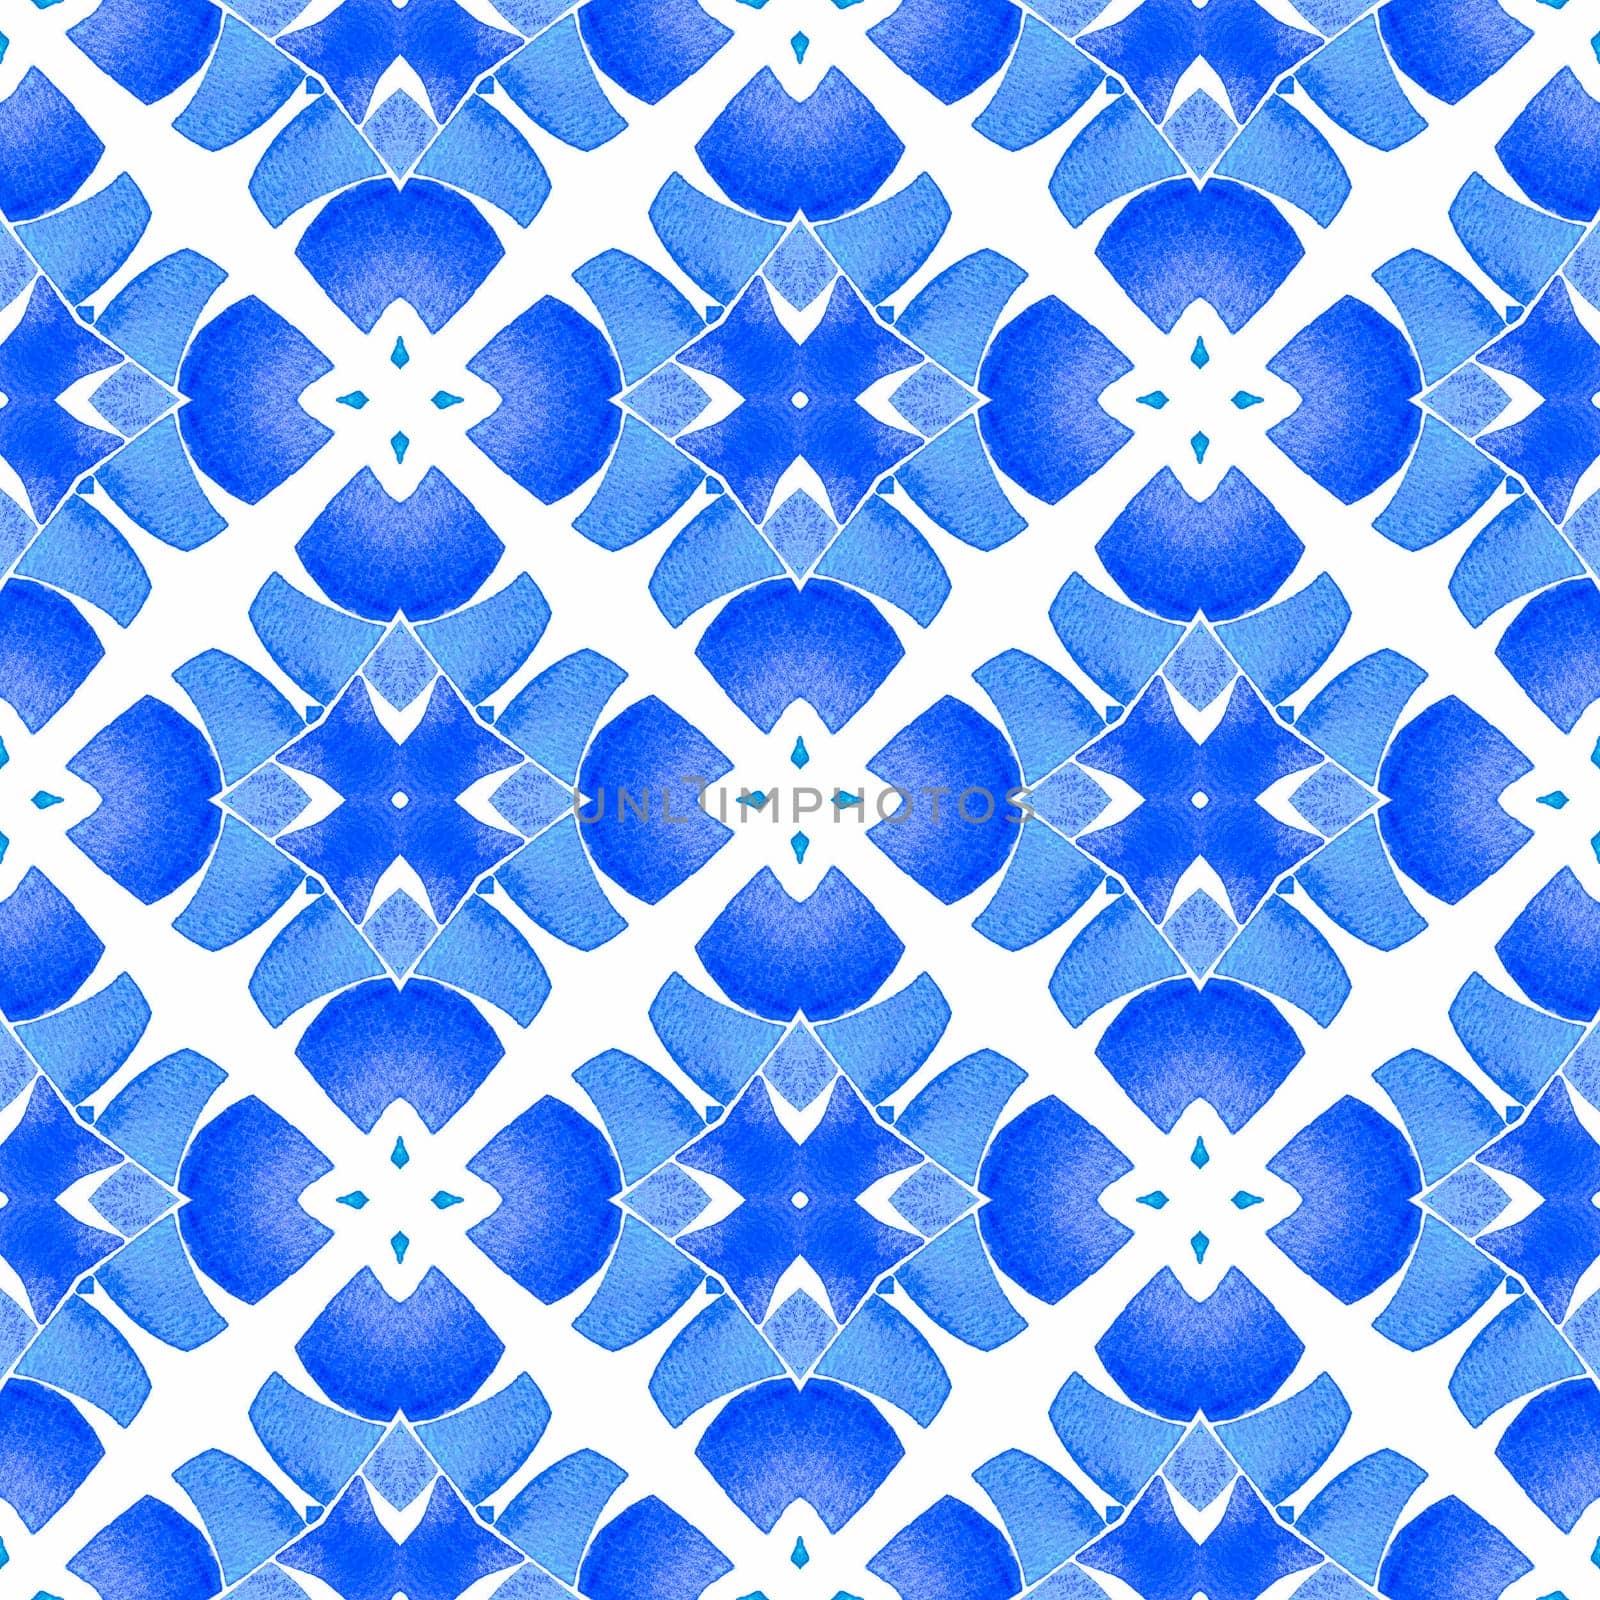 Textile ready ideal print, swimwear fabric, wallpaper, wrapping. Blue worthy boho chic summer design. Chevron watercolor pattern. Green geometric chevron watercolor border.